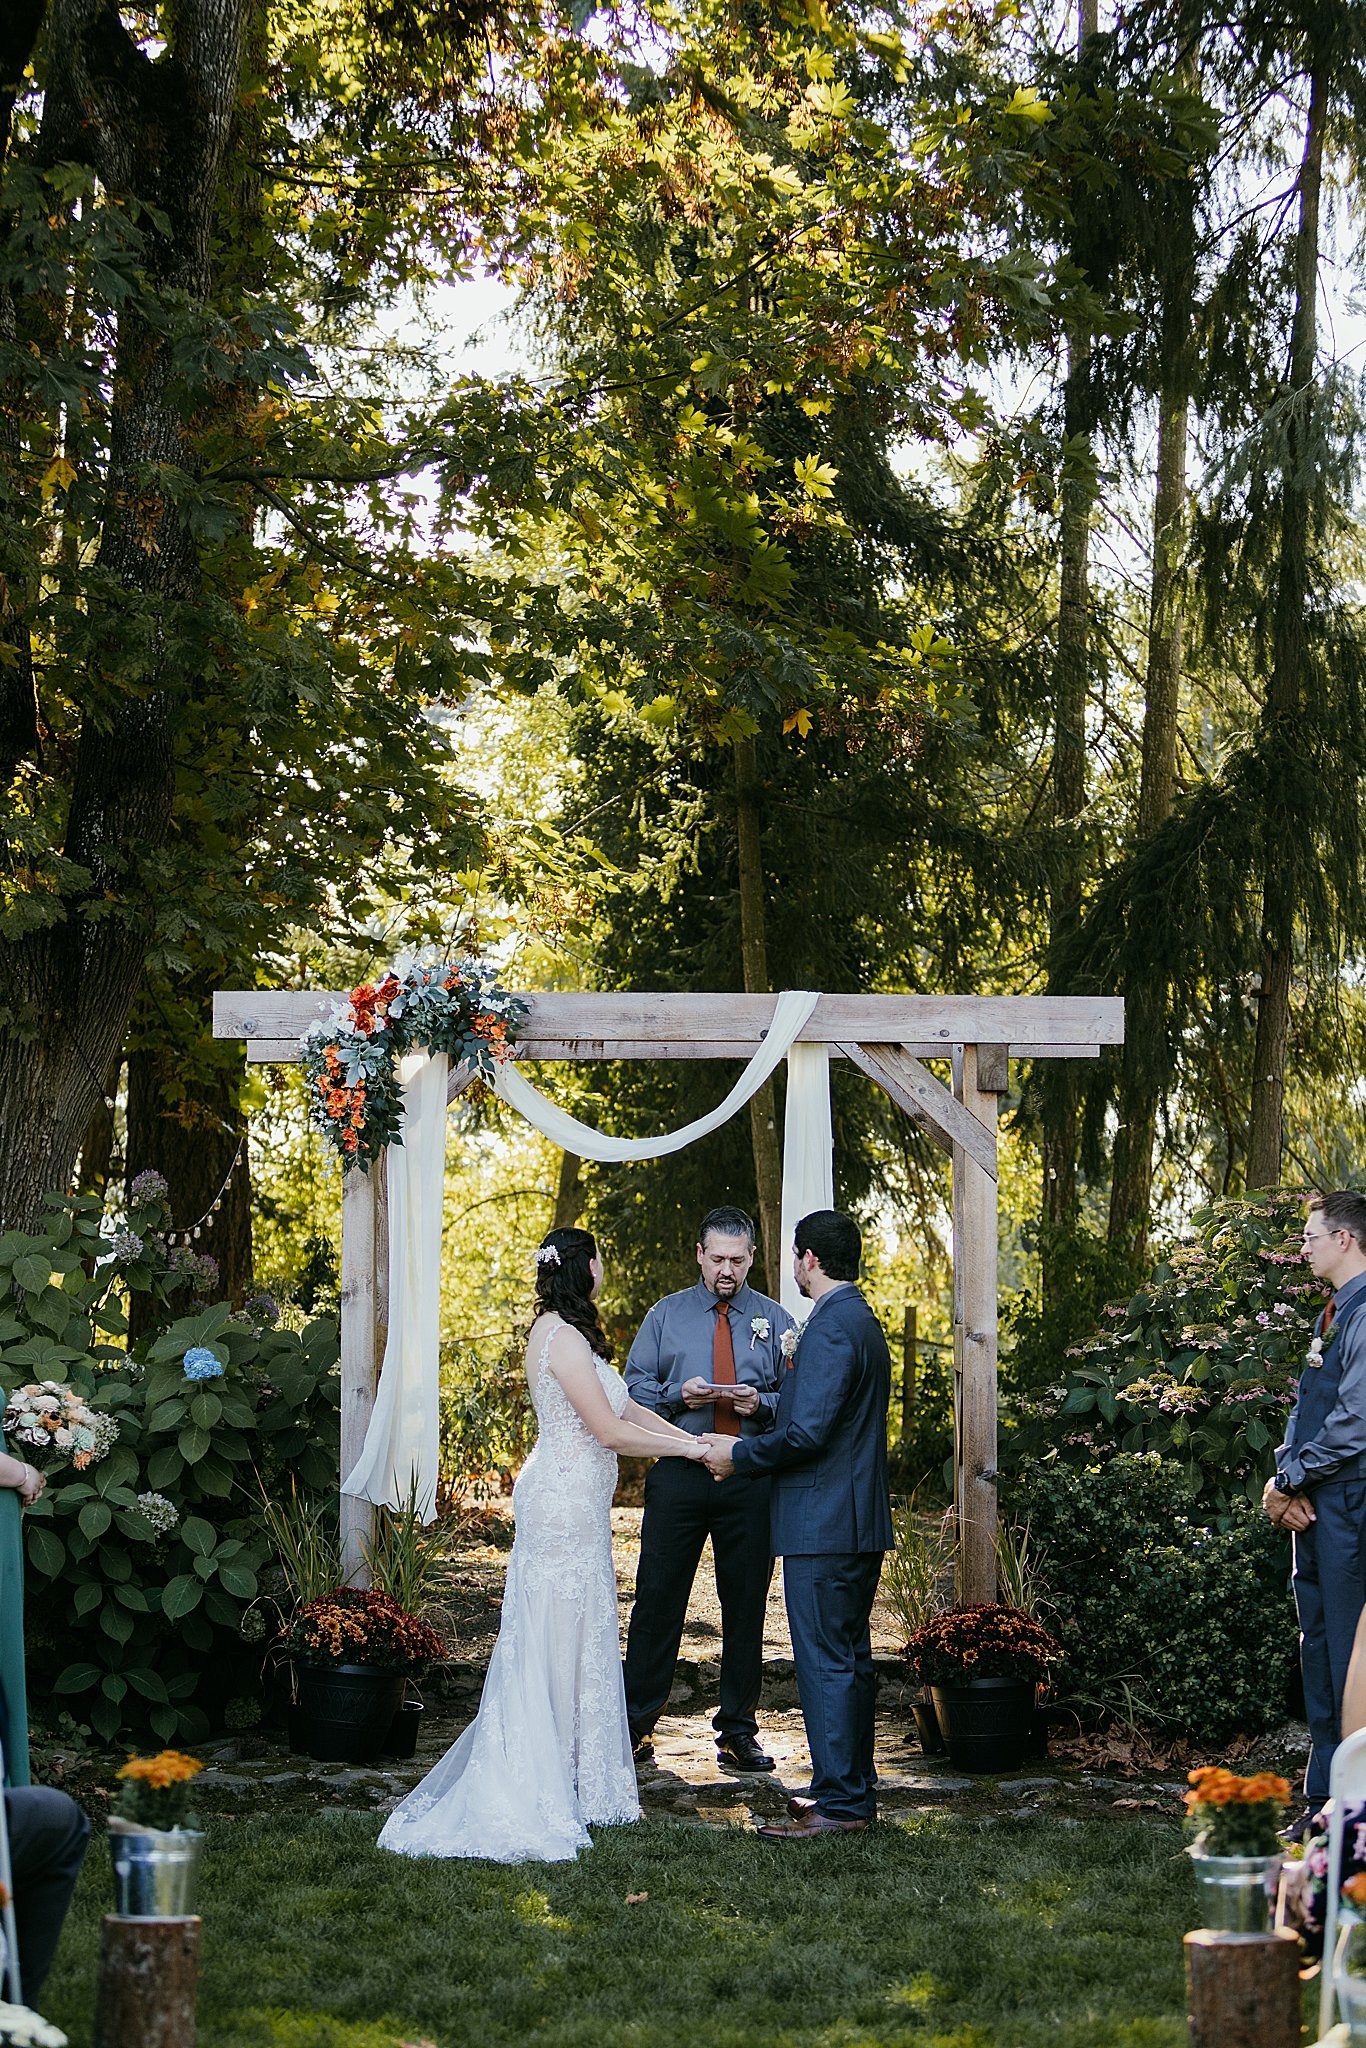 withstylePhotography_Oregon city Photographer_ Portland wedding photographer_Vanderbeck vally farms wedding_Oregon elopment Photographer0035.jpg